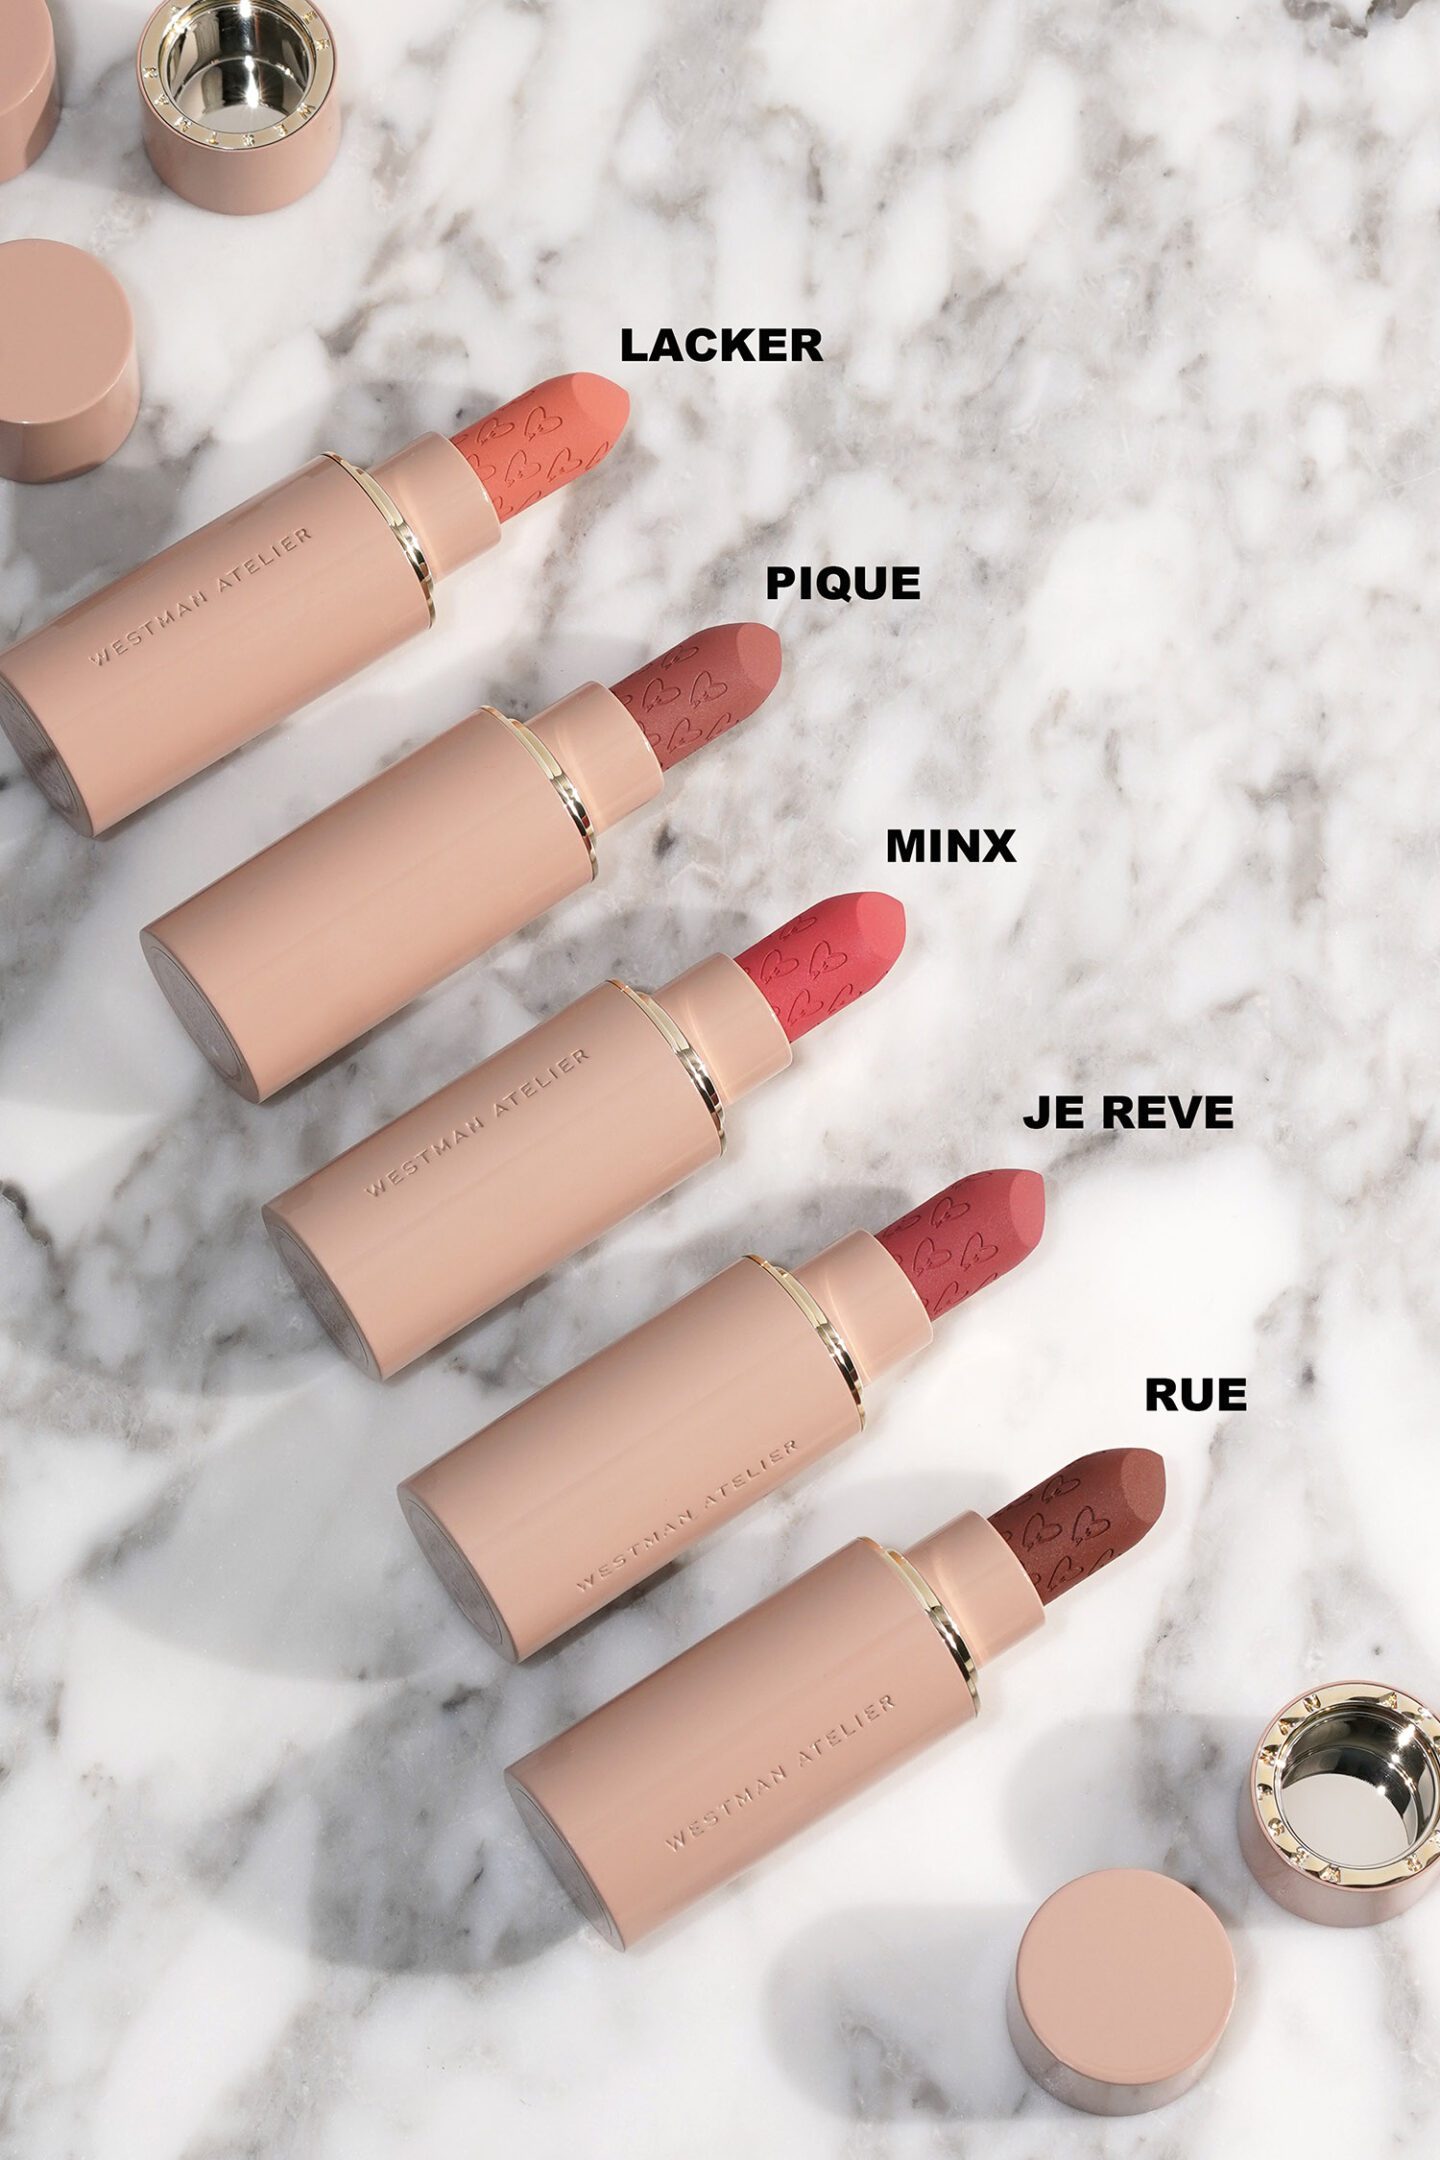 Westman Atelier Lip Suede Matte Lipstick review via The Beauty Lookbook